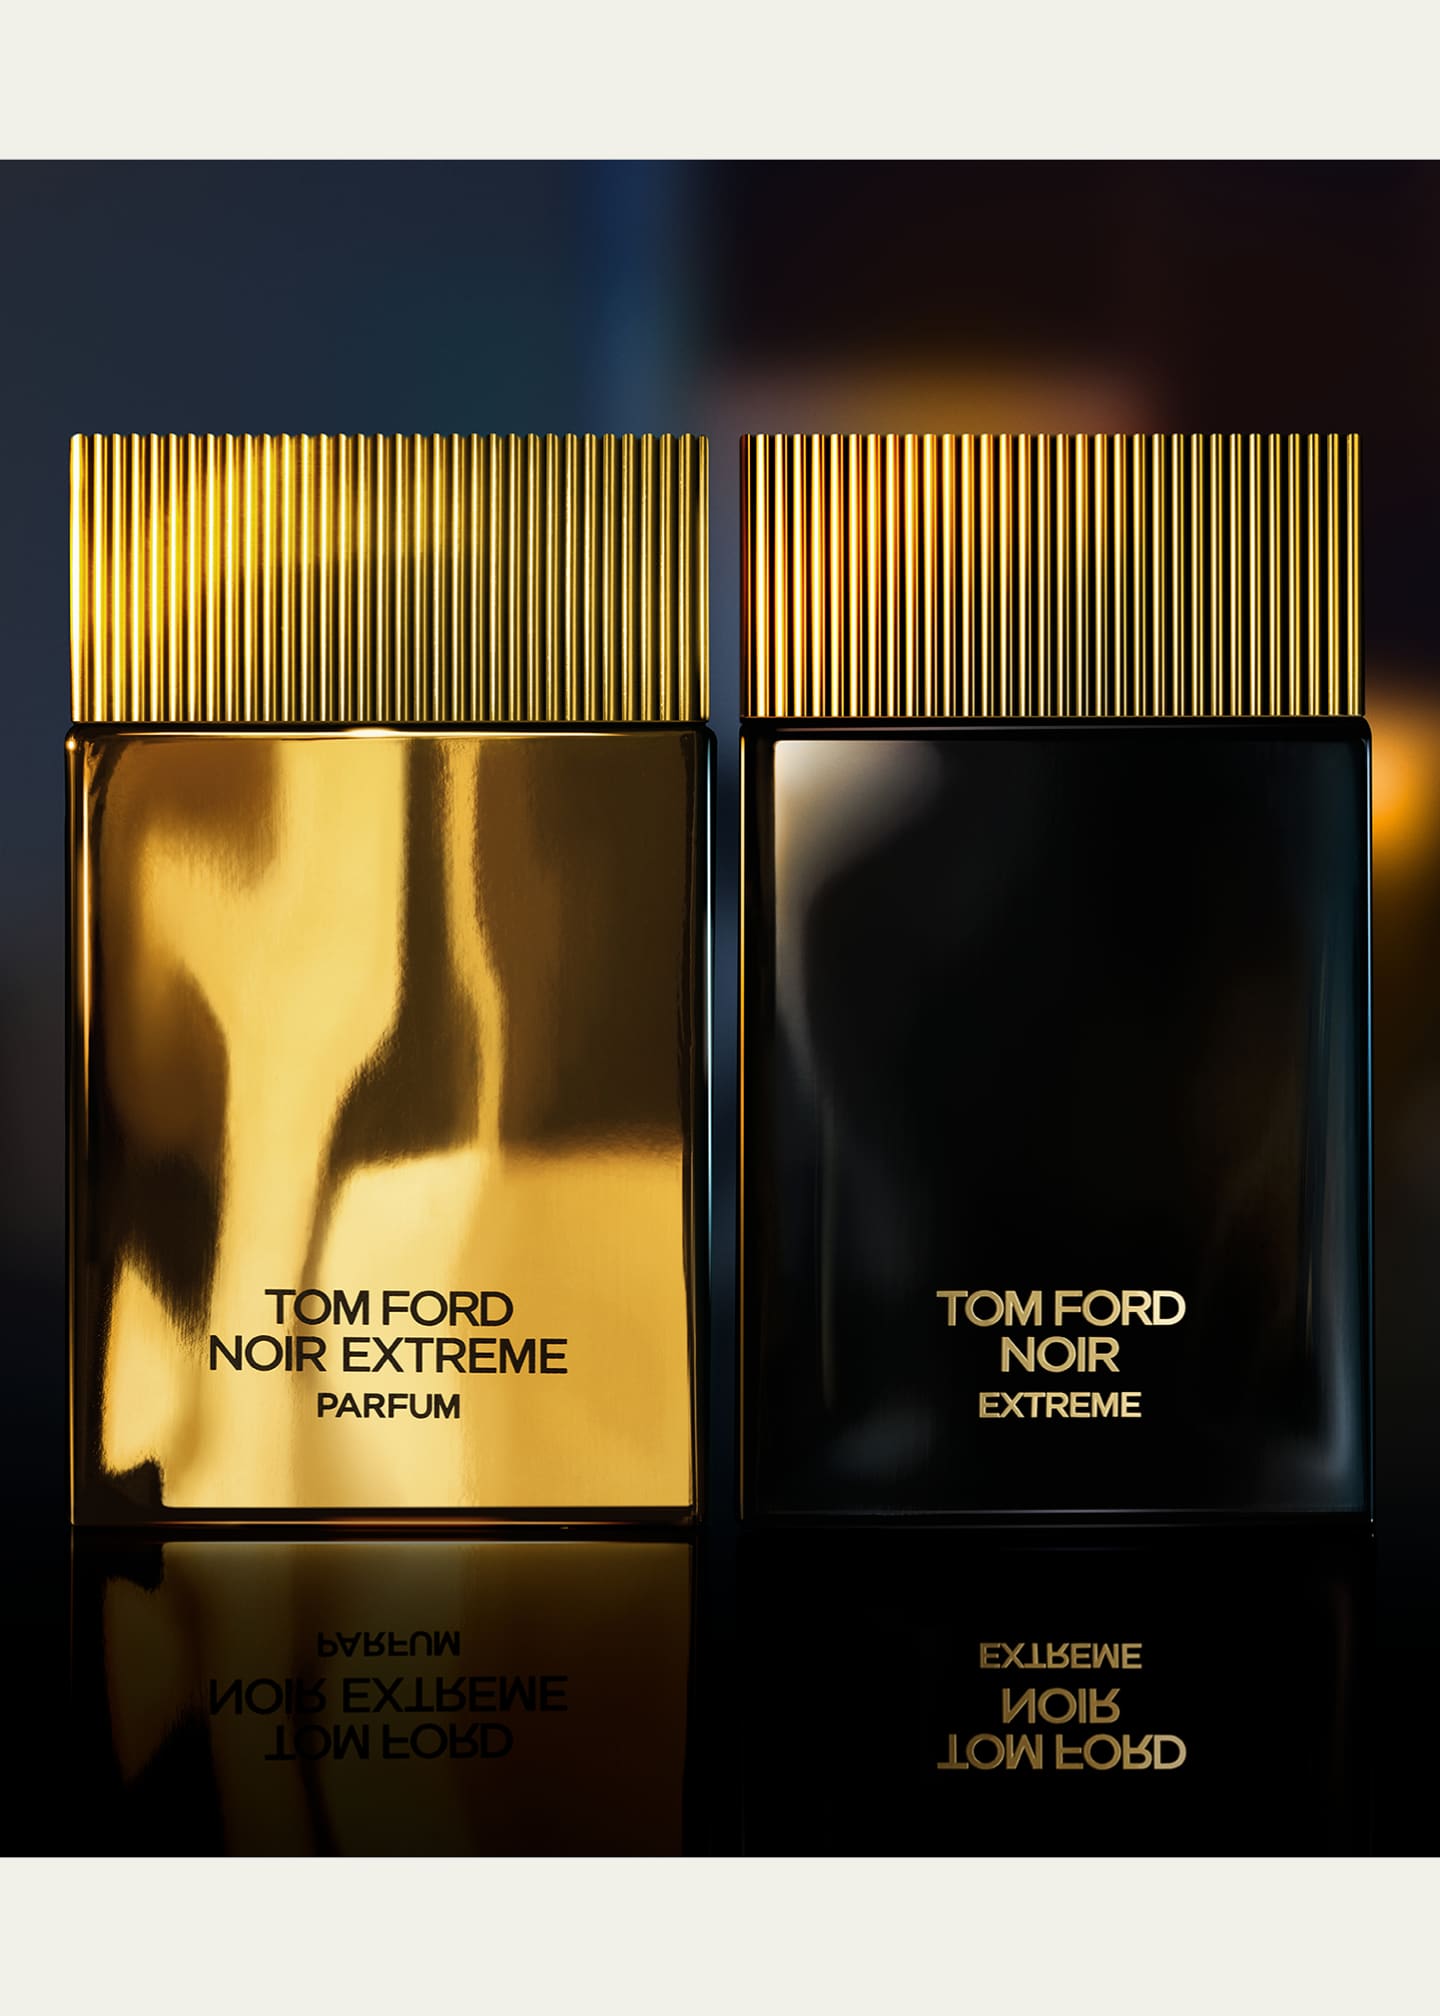 TOM FORD Noir Extreme Parfum, 1.7 oz. - Bergdorf Goodman